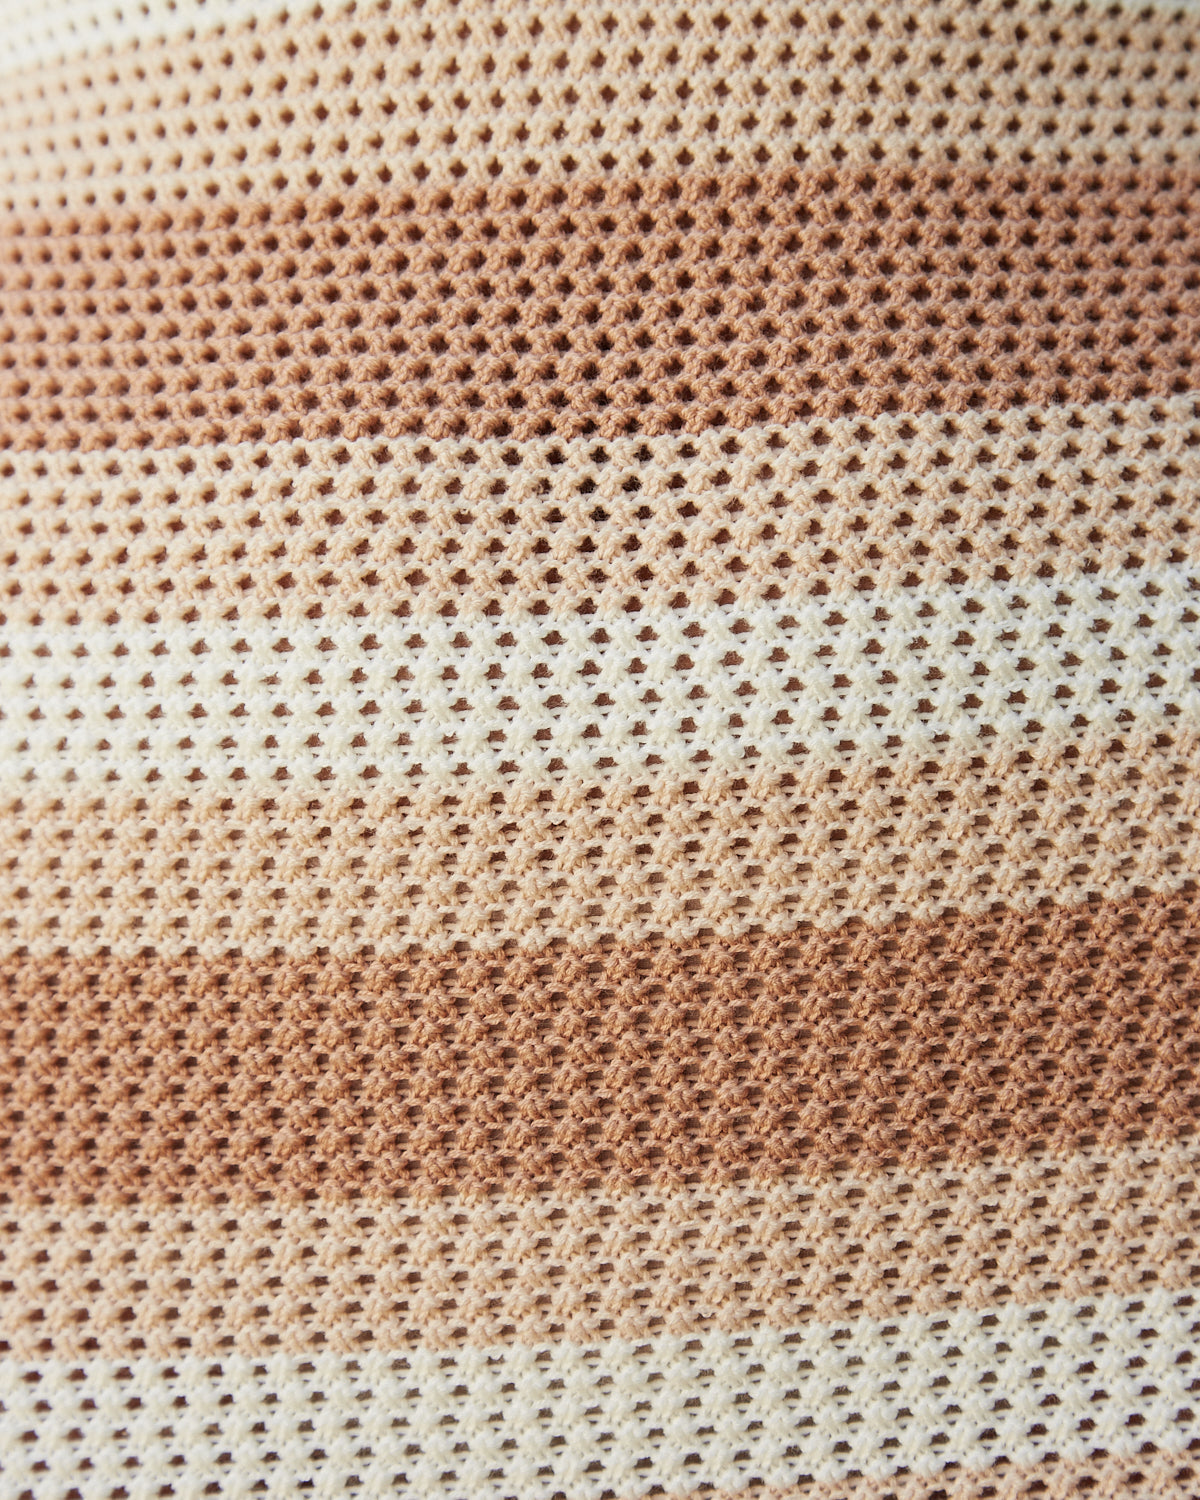 Close up of the freyja brown halterneck mini dress